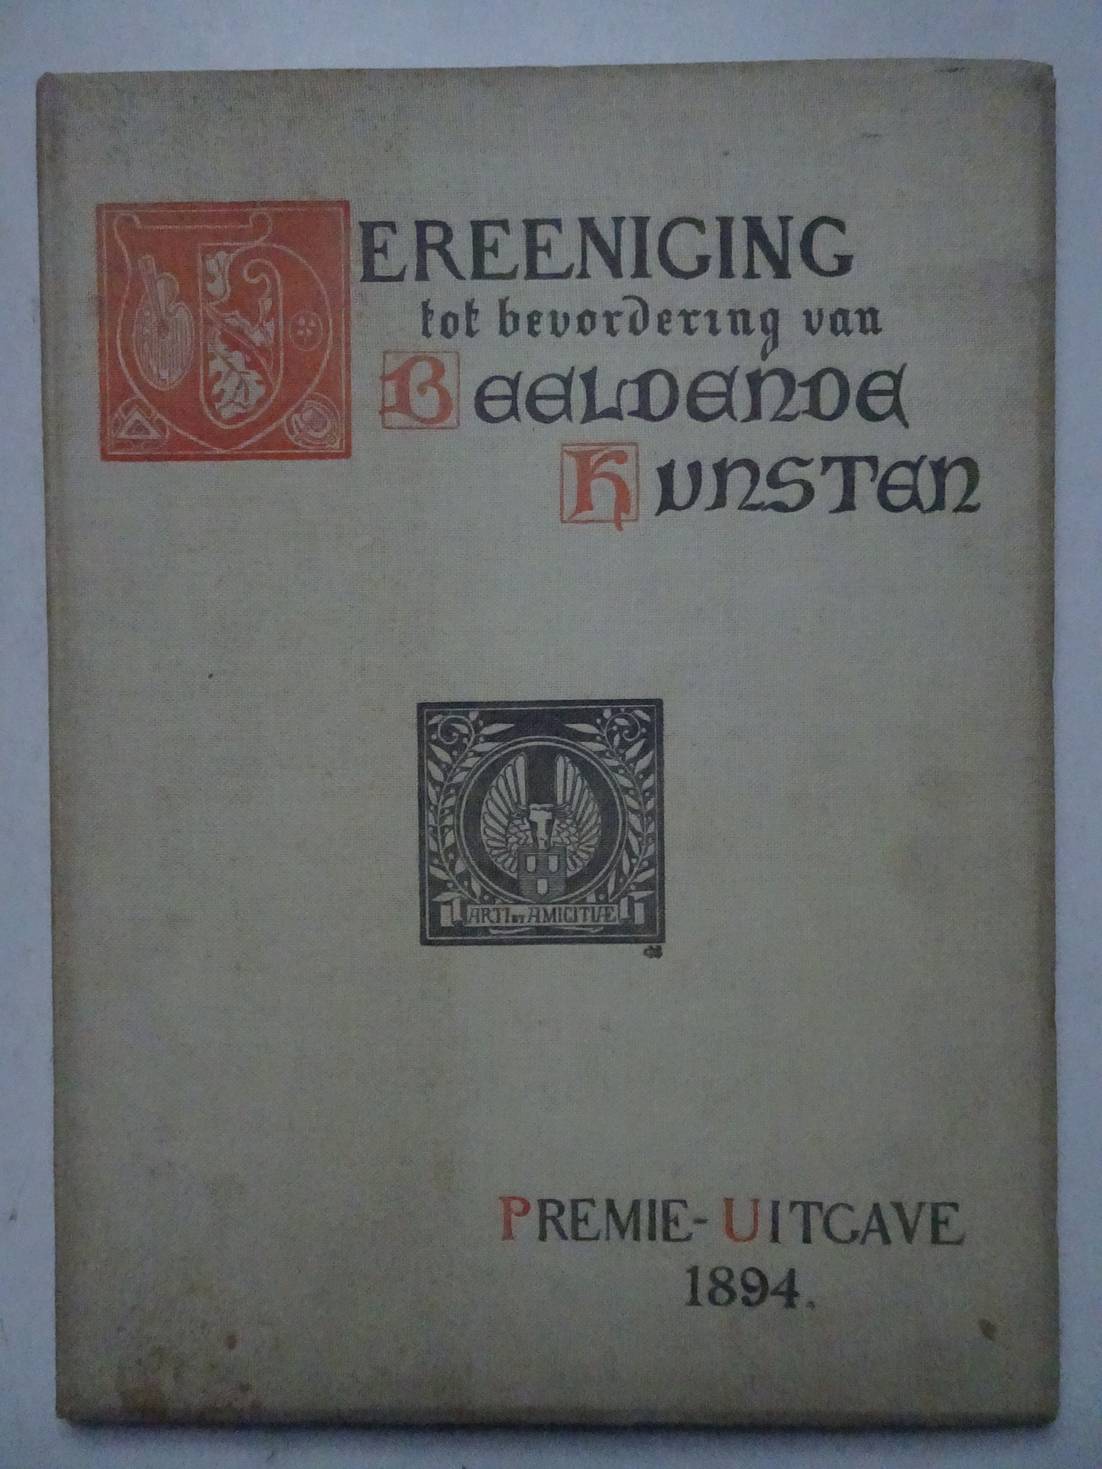 -. - Vereeniging tot Bevordering van Beeldende Kunste. Premie-uitgave 1894.